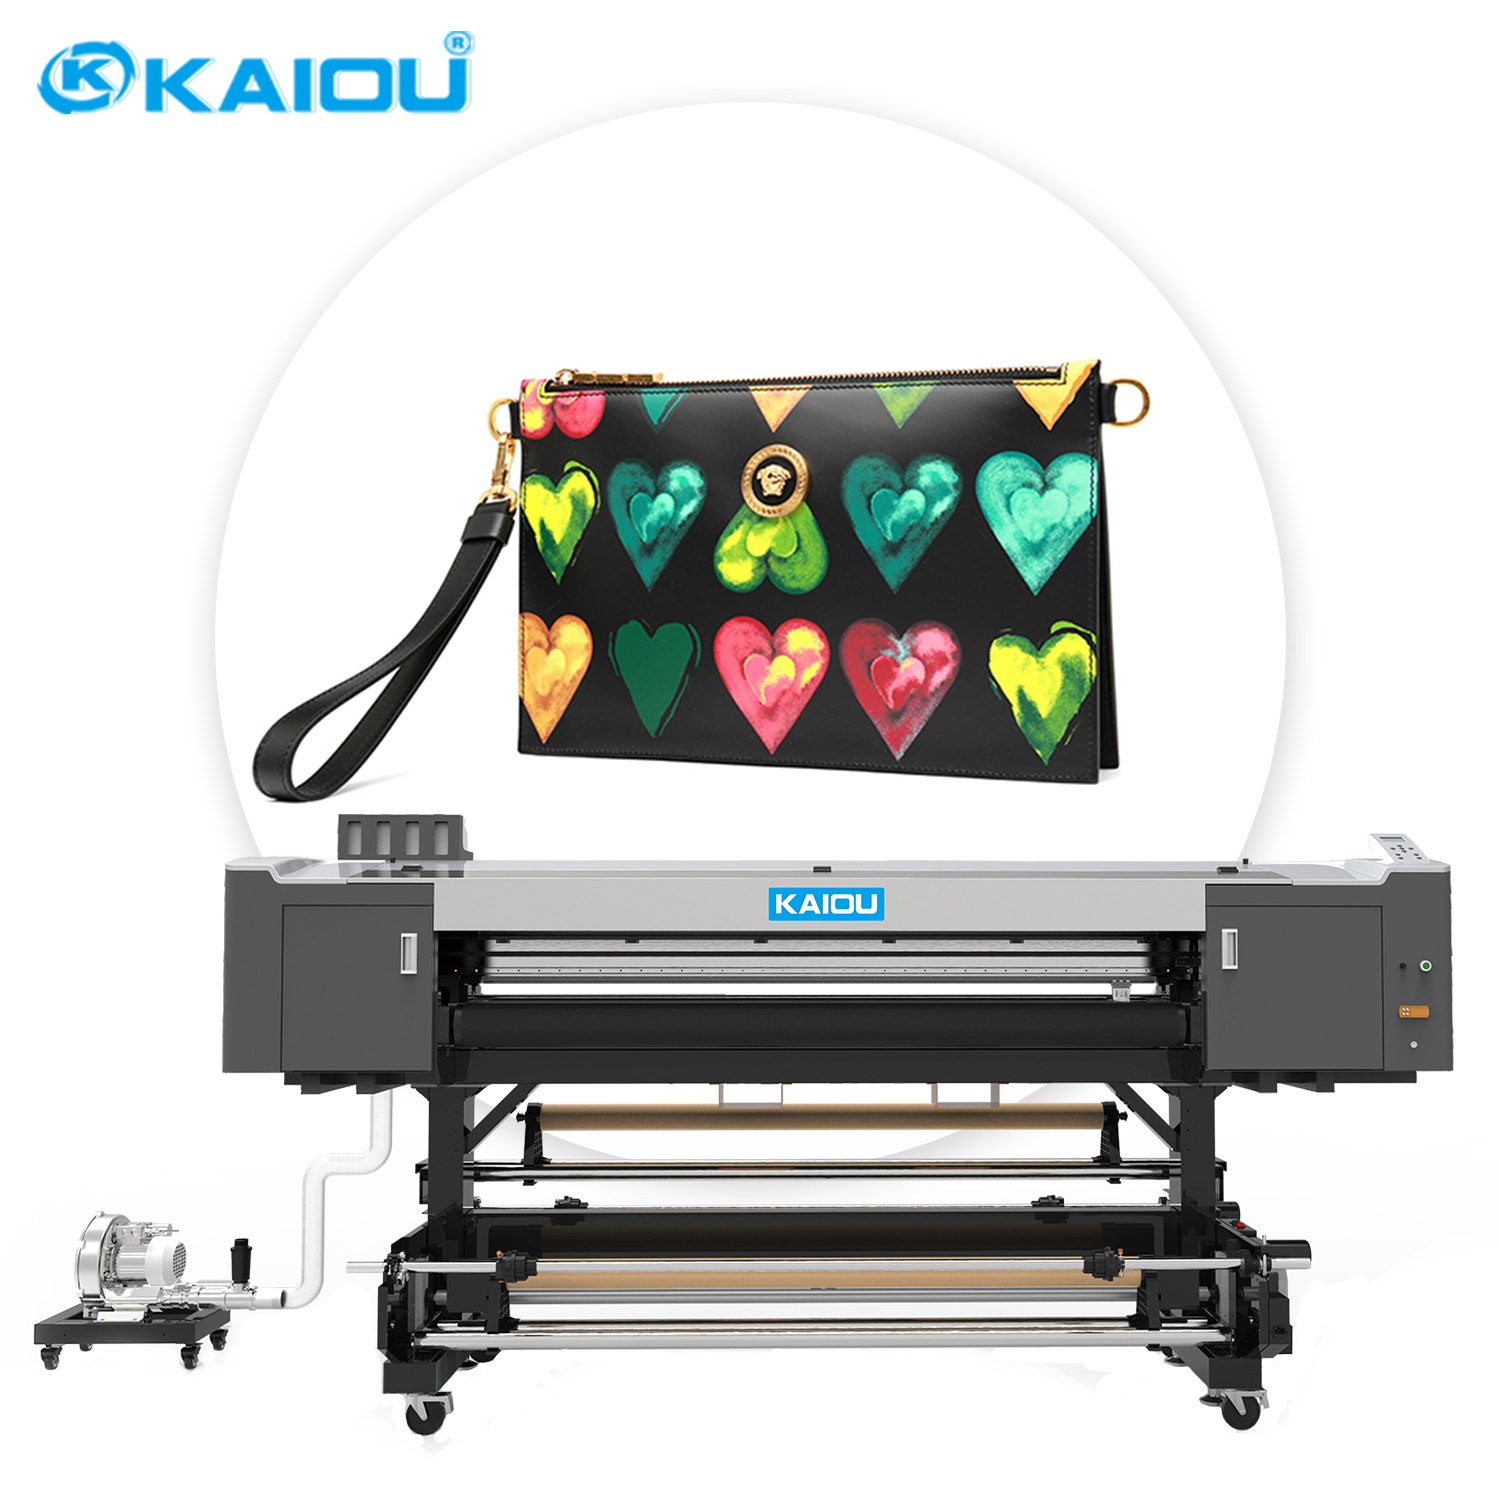 Impresora uv kaiou de 1,8 m, impresora UV comercial de gran formato, rollo a rollo